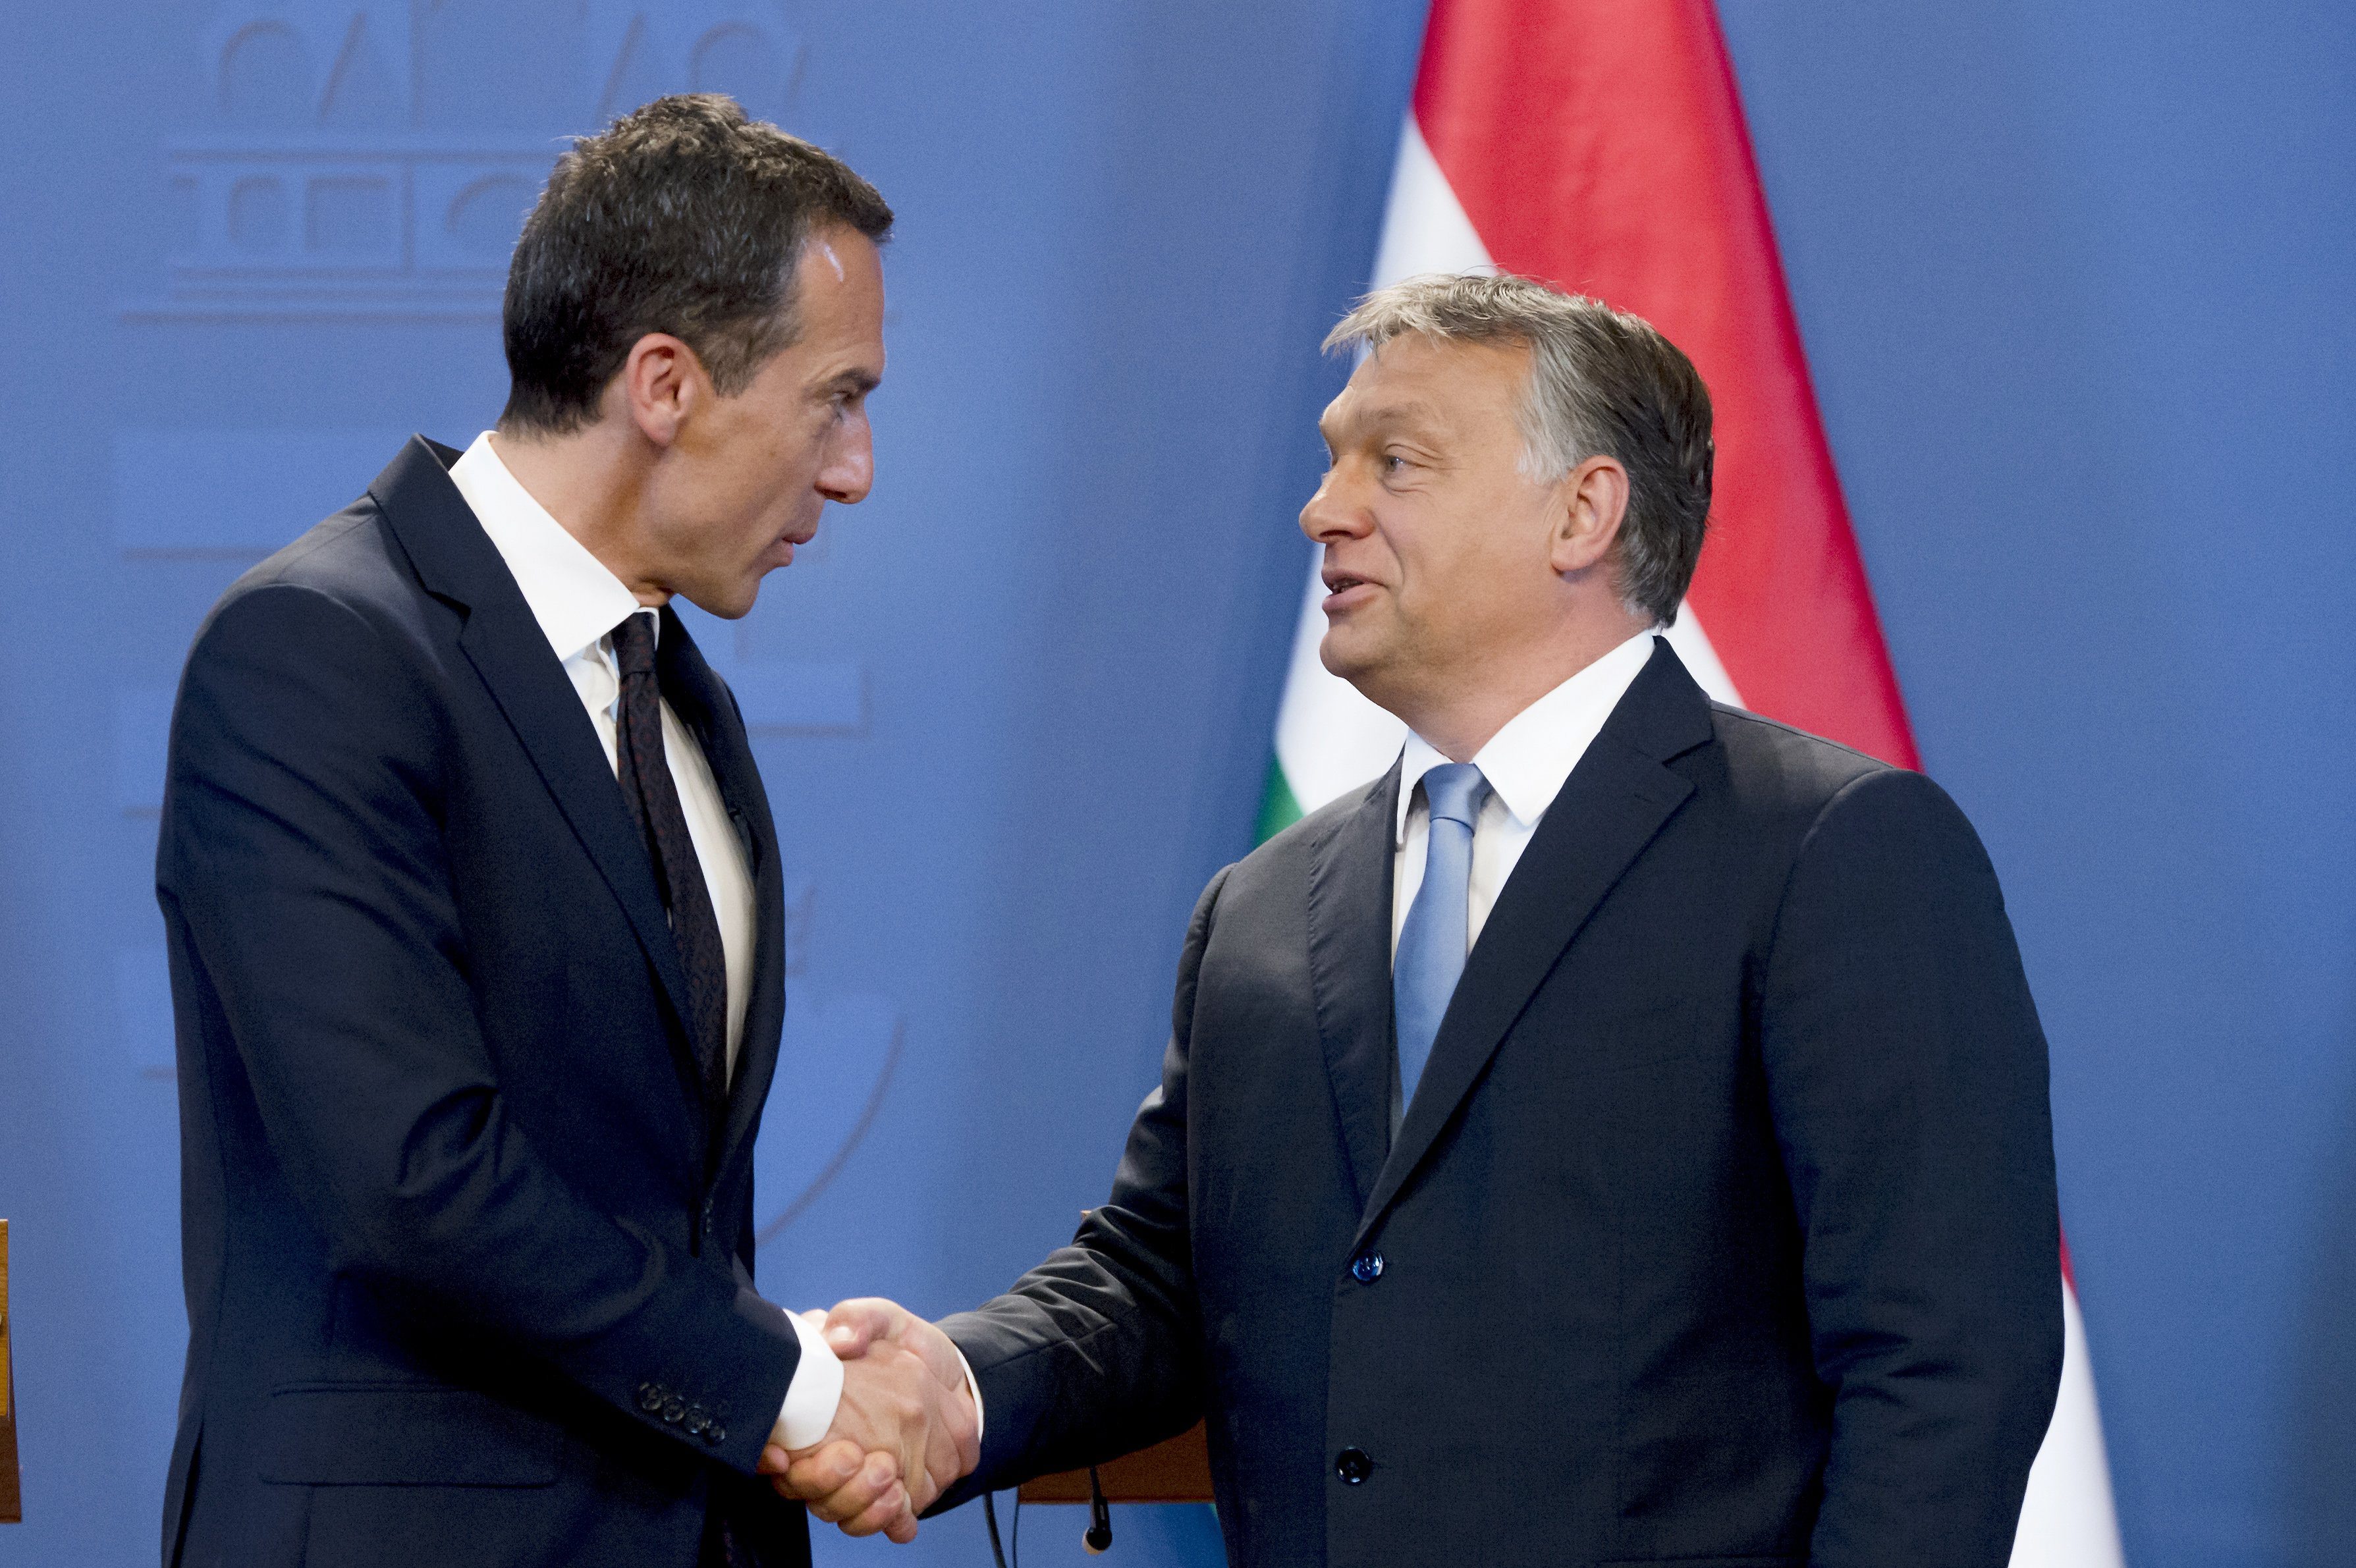 Austrian Federal Chancellor Christian Kern visits Budapest